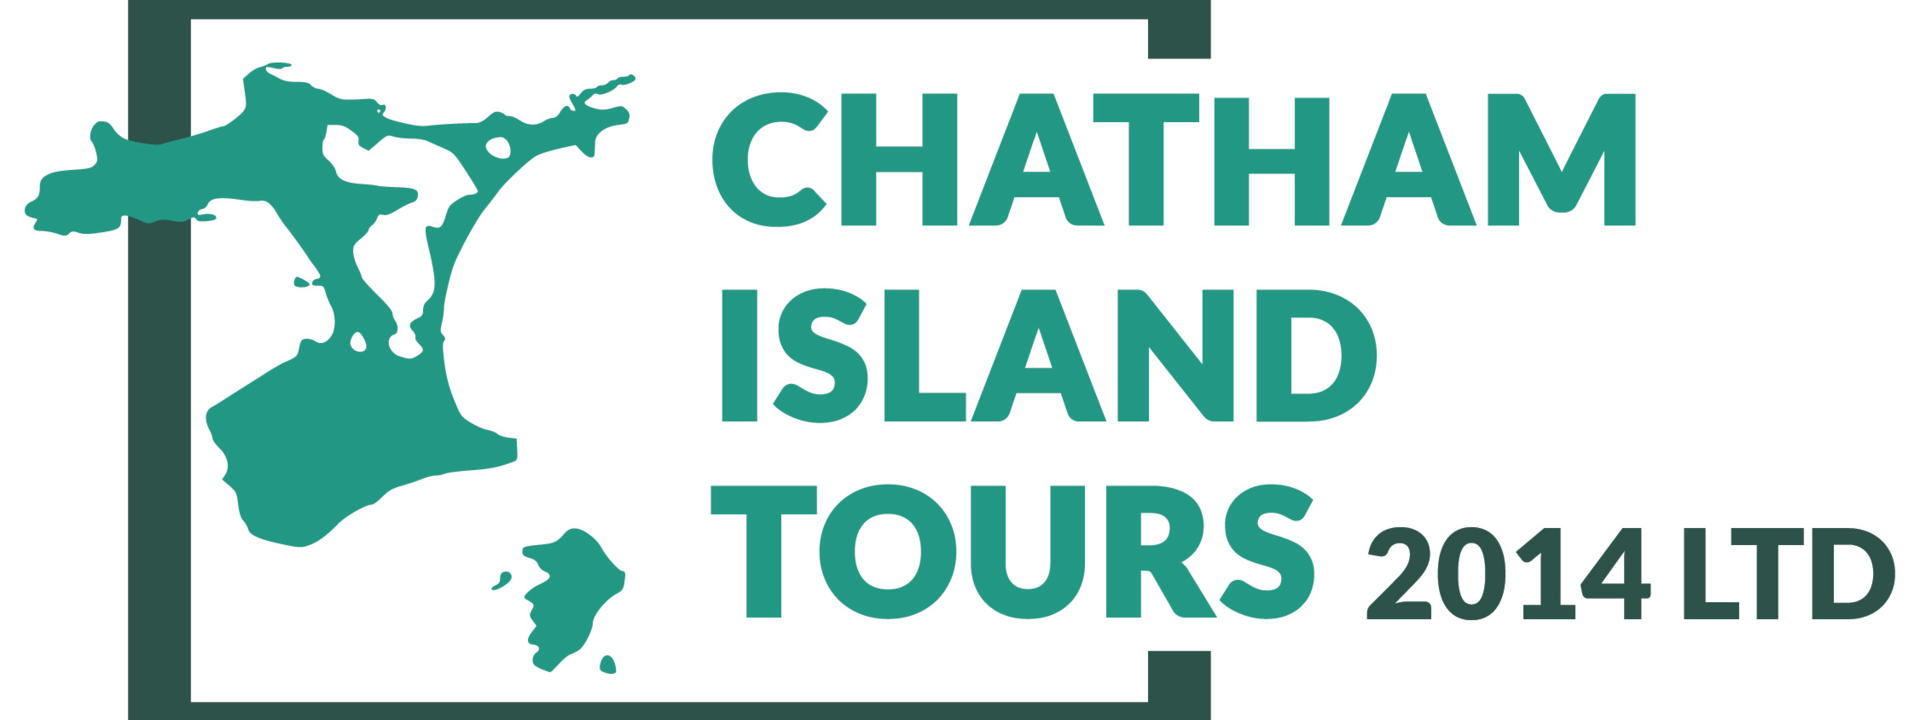 Chatham Island Tours Logo - 1080 x 468-03.jpg